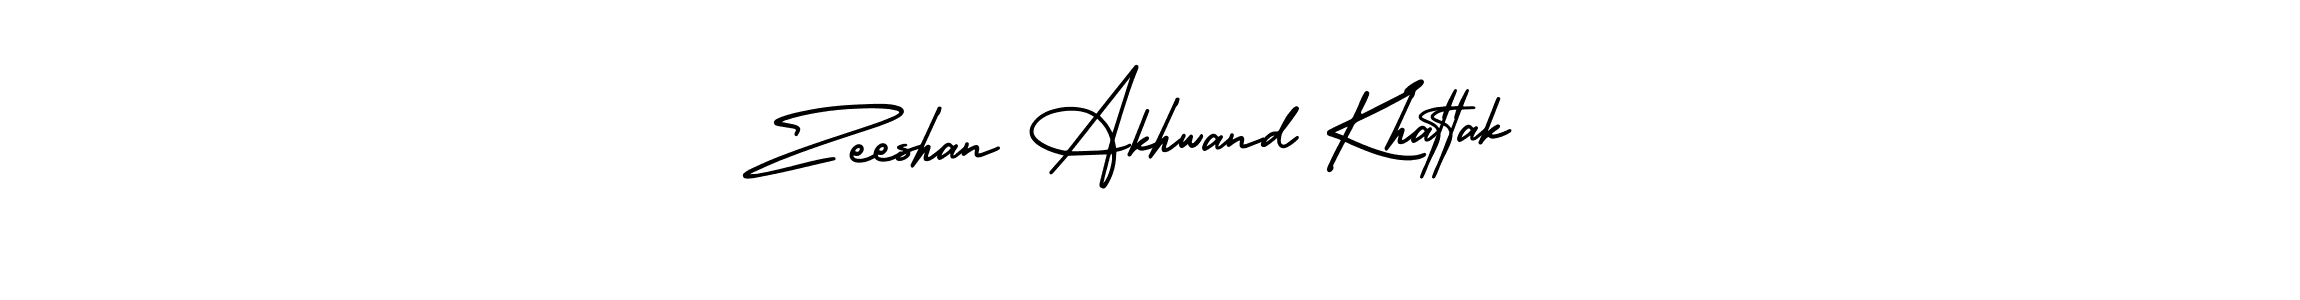 Best and Professional Signature Style for Zeeshan Akhwand Khattak. AmerikaSignatureDemo-Regular Best Signature Style Collection. Zeeshan Akhwand Khattak signature style 3 images and pictures png